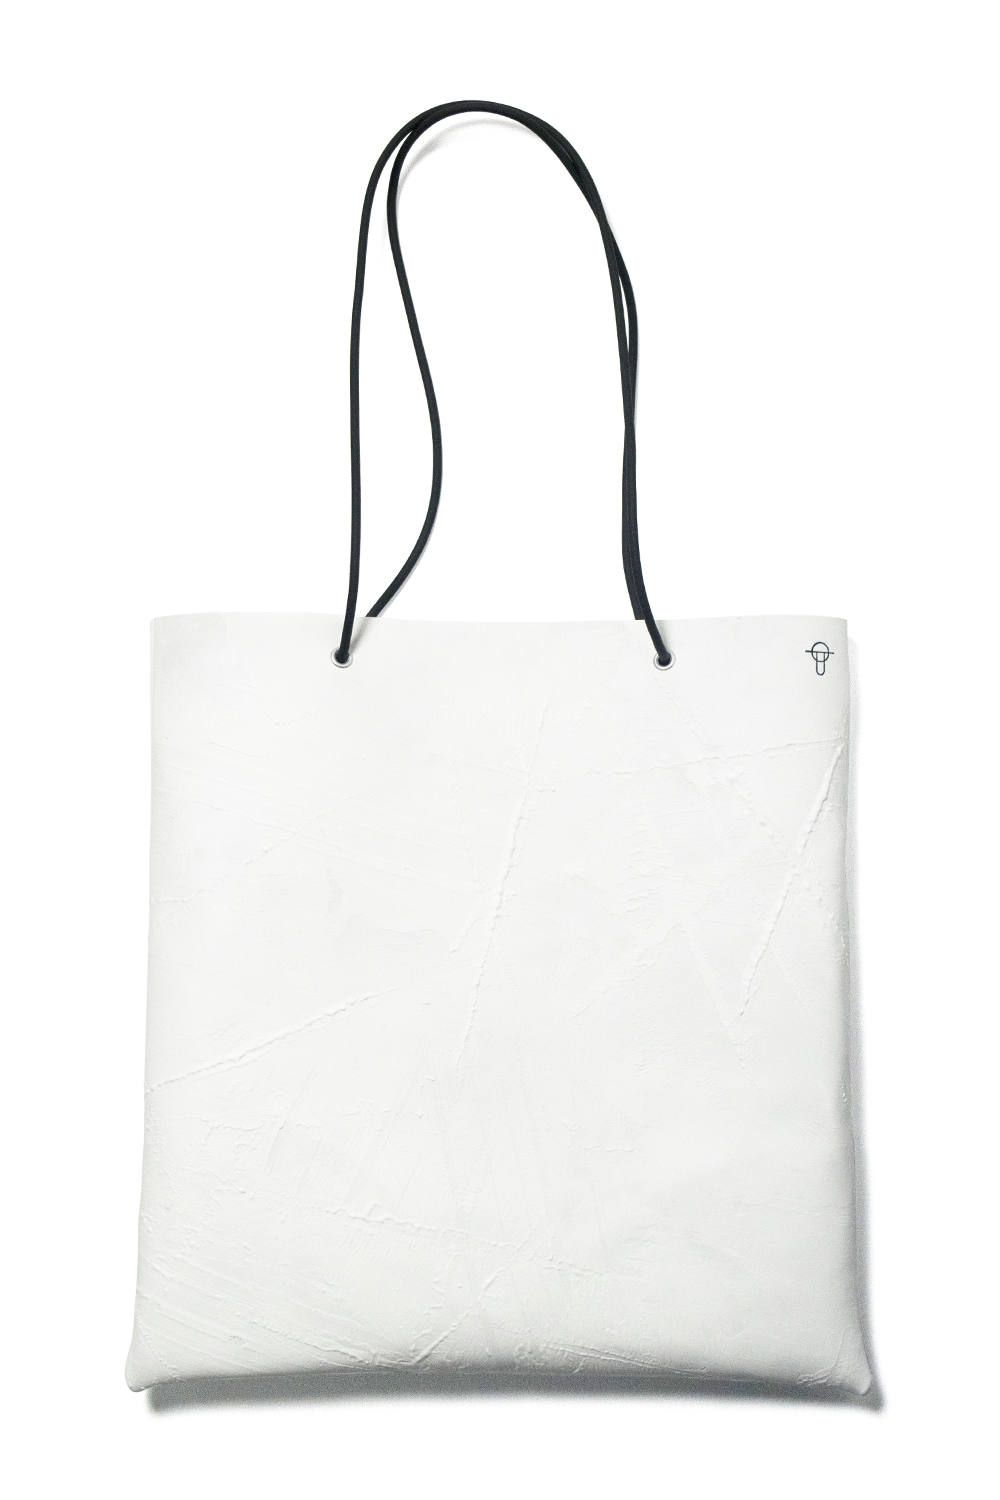 KAGARI YUSUKE - 【お取り寄せ可能】シンプルトートバッグ [ホワイト 